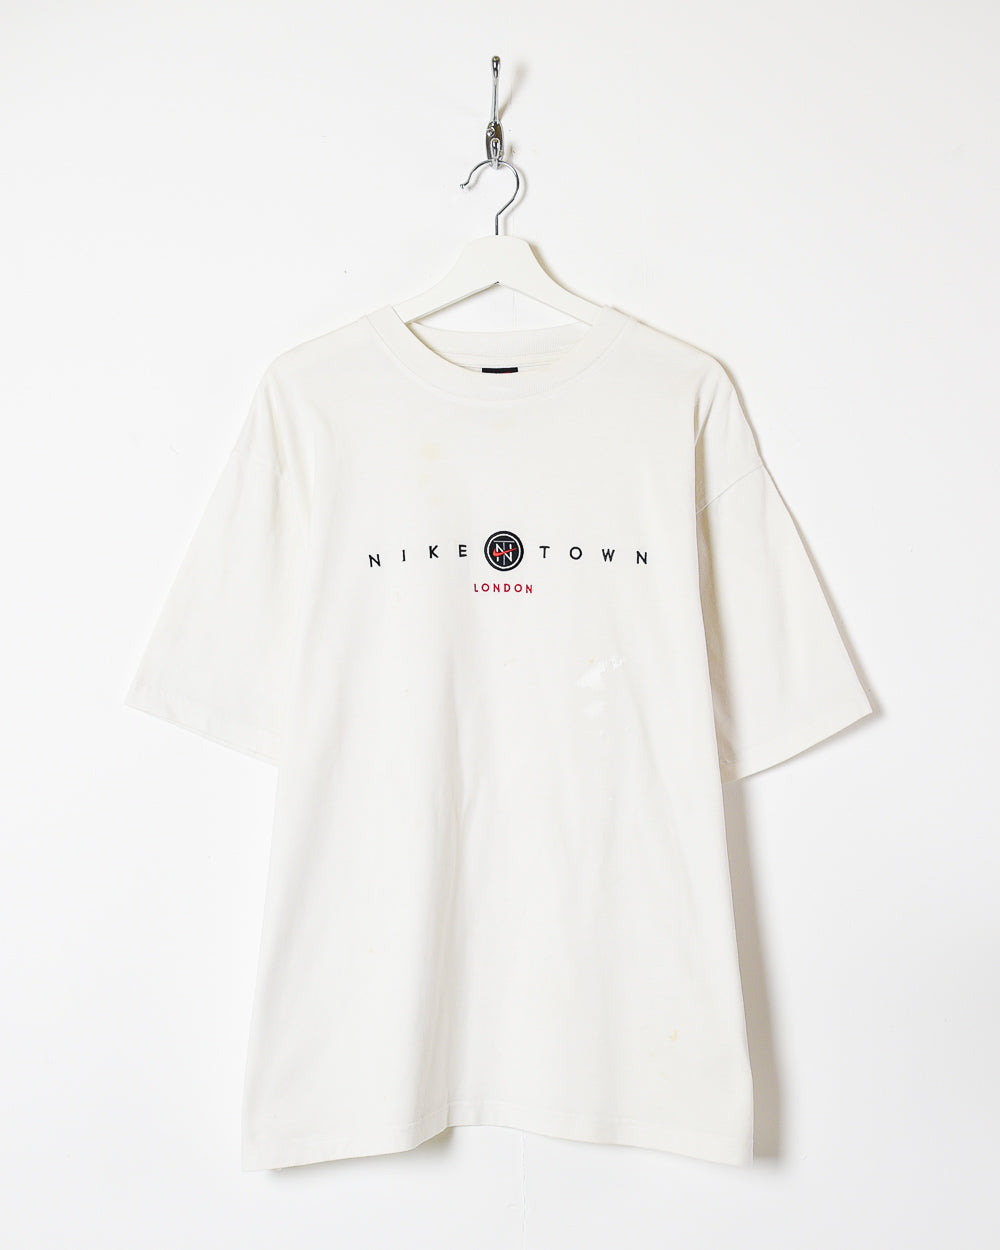 Vintage 90s White Nike Town London T-Shirt Vintage